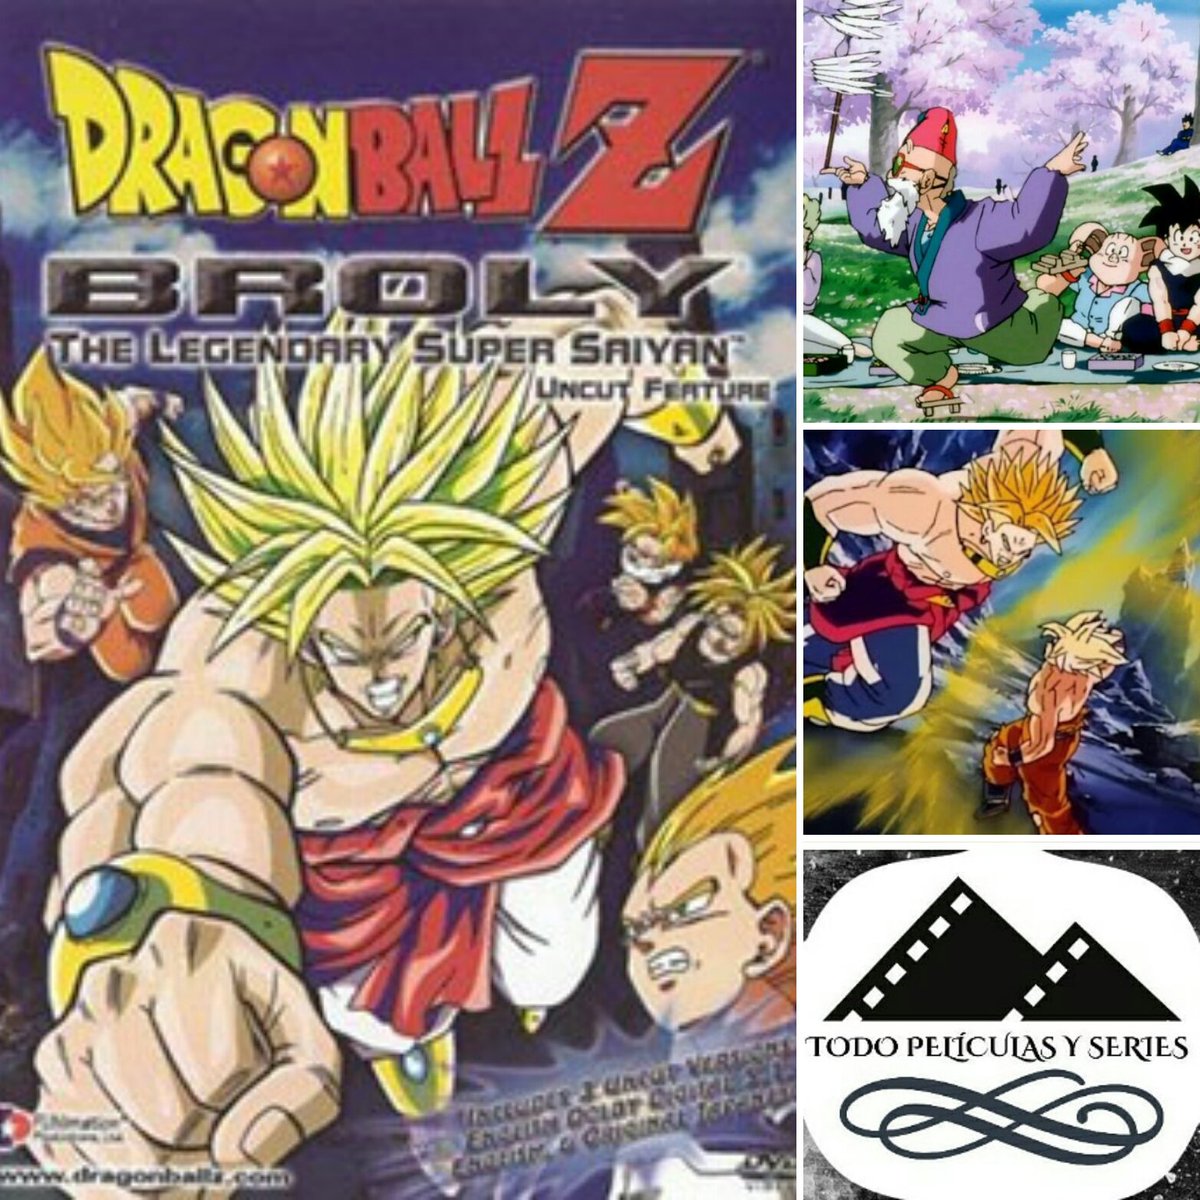 Dragon Ball Z: Estalla el duelo (1993) (Broly: The Legendary Super Saiyan). Sinopsis: Décimo primera película basada en el manga/anime de Akira Toriyama y octava de la etapa Dragon Ball Z. Broly, un saijayin legendario, llega a la Tierra para enfrentarse a Goku.